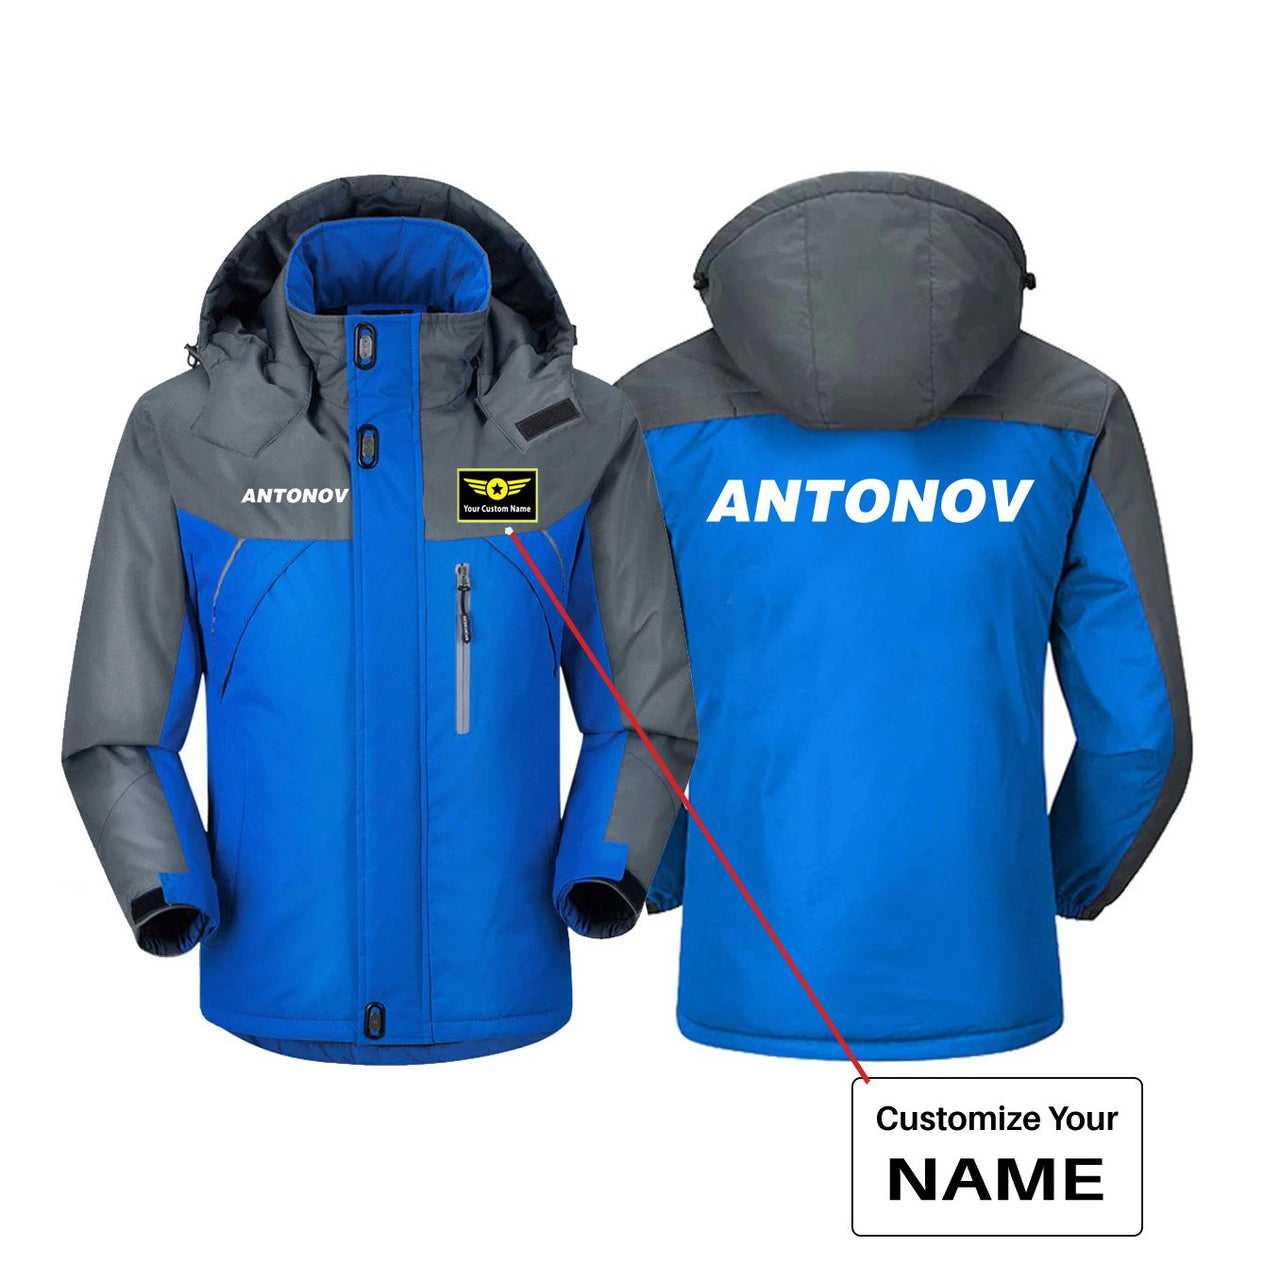 Antonov & Text Designed Thick Winter Jackets